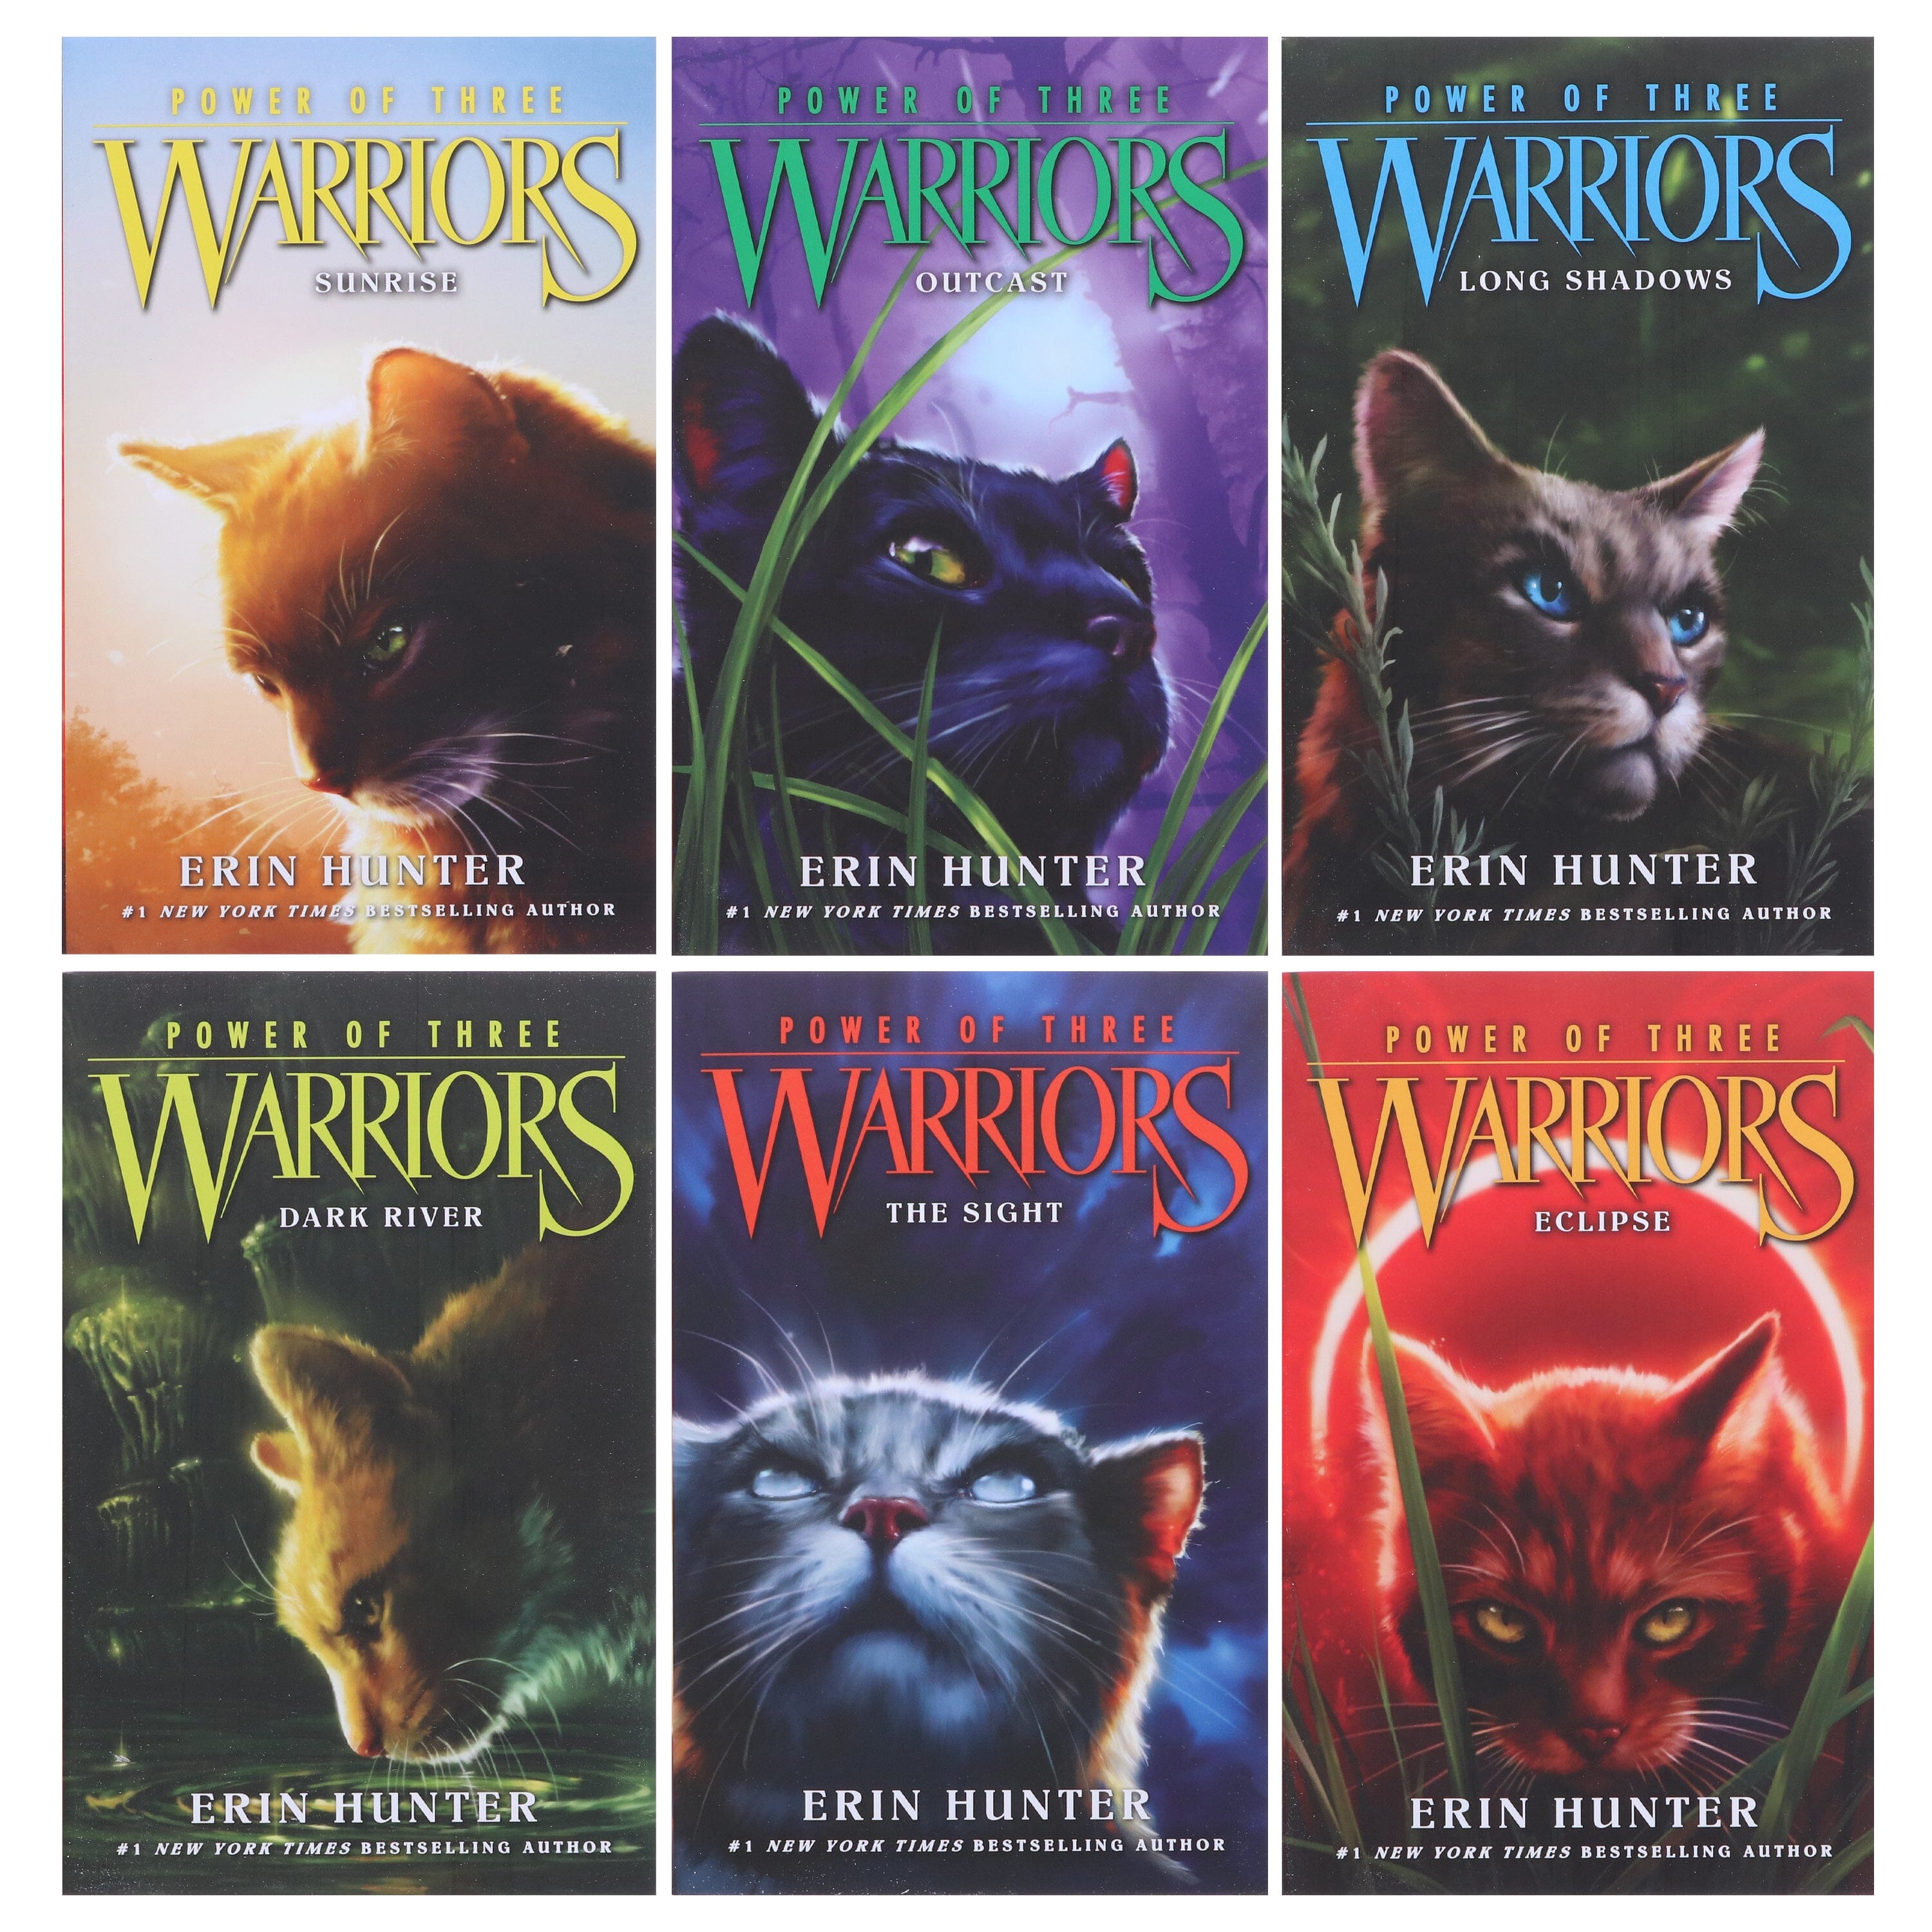 Warriors Power Of Three Eclipse Book